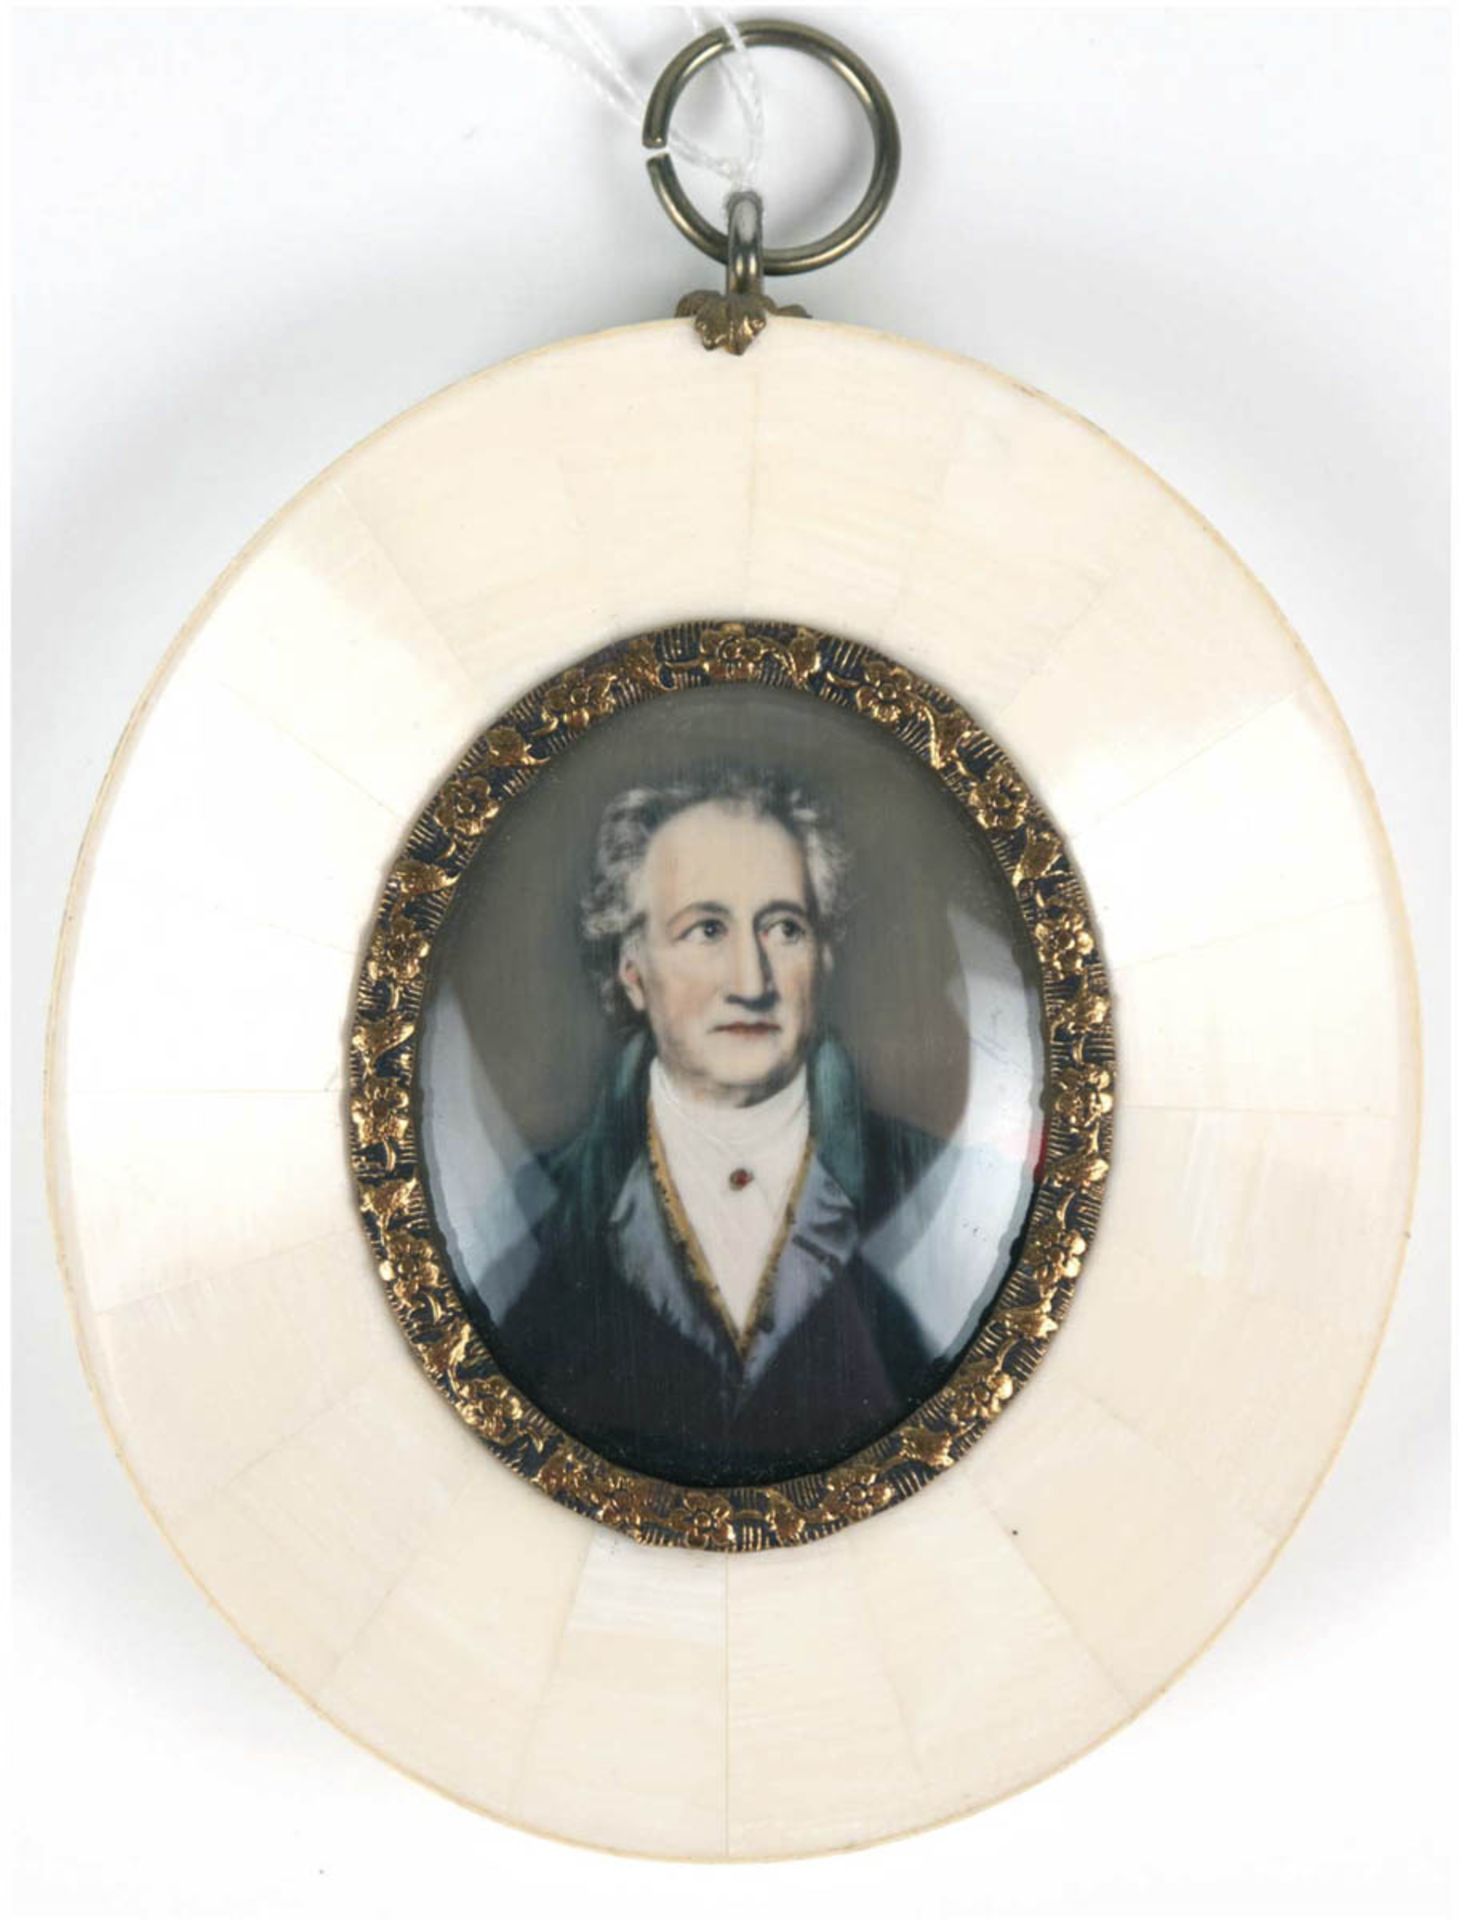 Miniatur, 20. Jh., "Porträt von Johann Wolfgang v. Goethe", Öl/Bein, unleserl. signiertm.r., 4,8x3,7